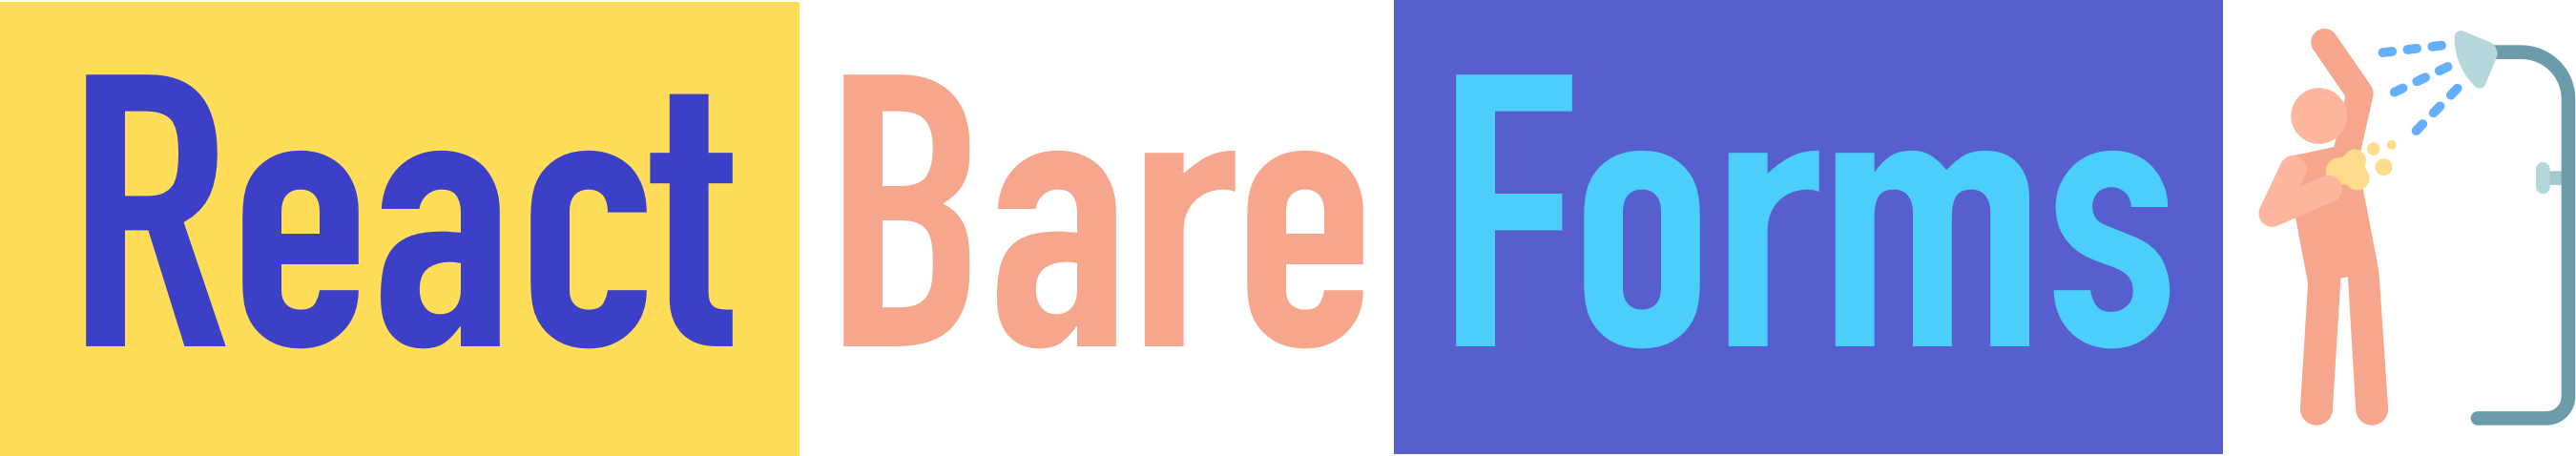 rbf_logo4